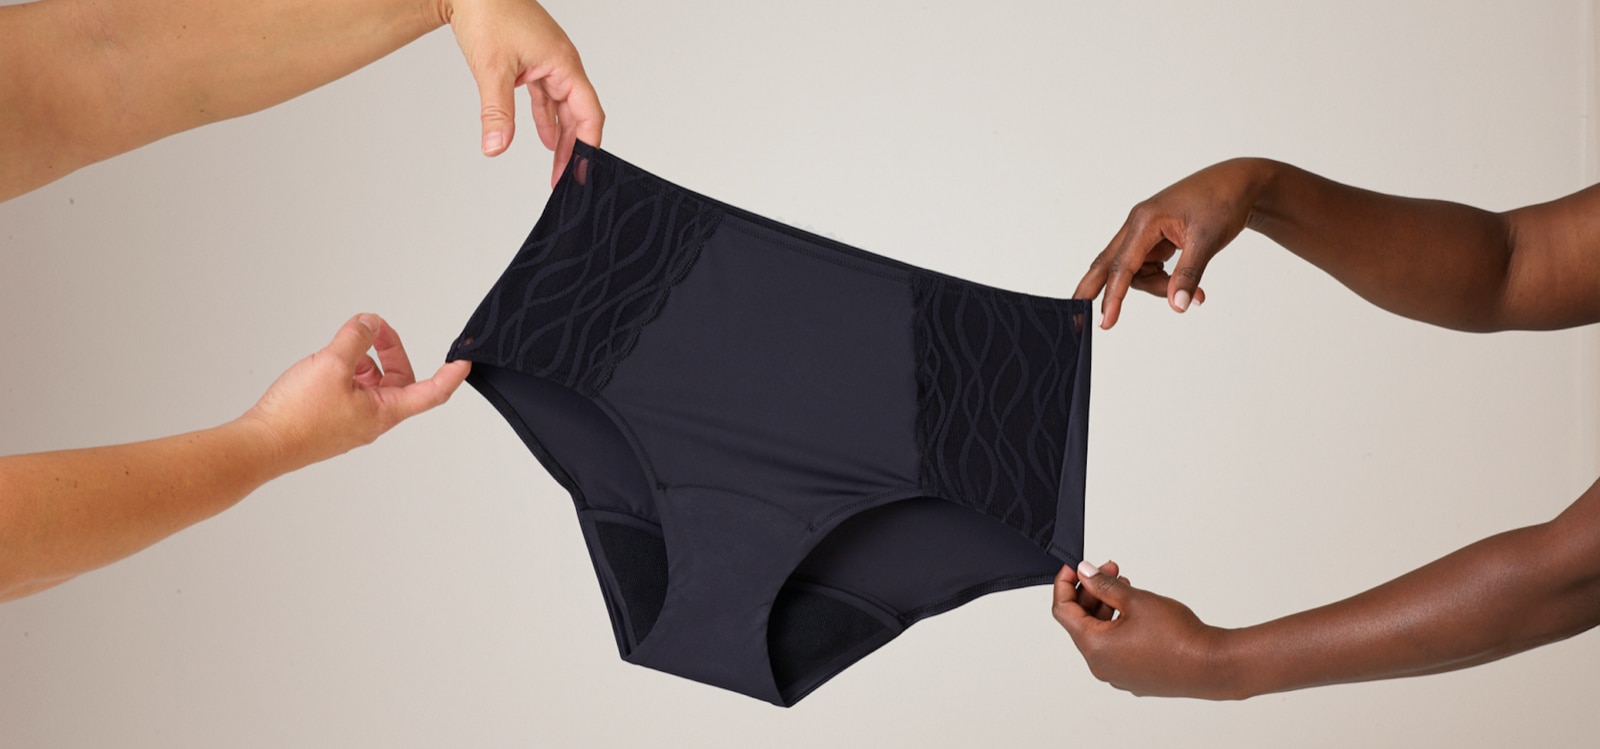 Always Discreet Underwear Incontinence Pants Women Plus M - ASDA Groceries